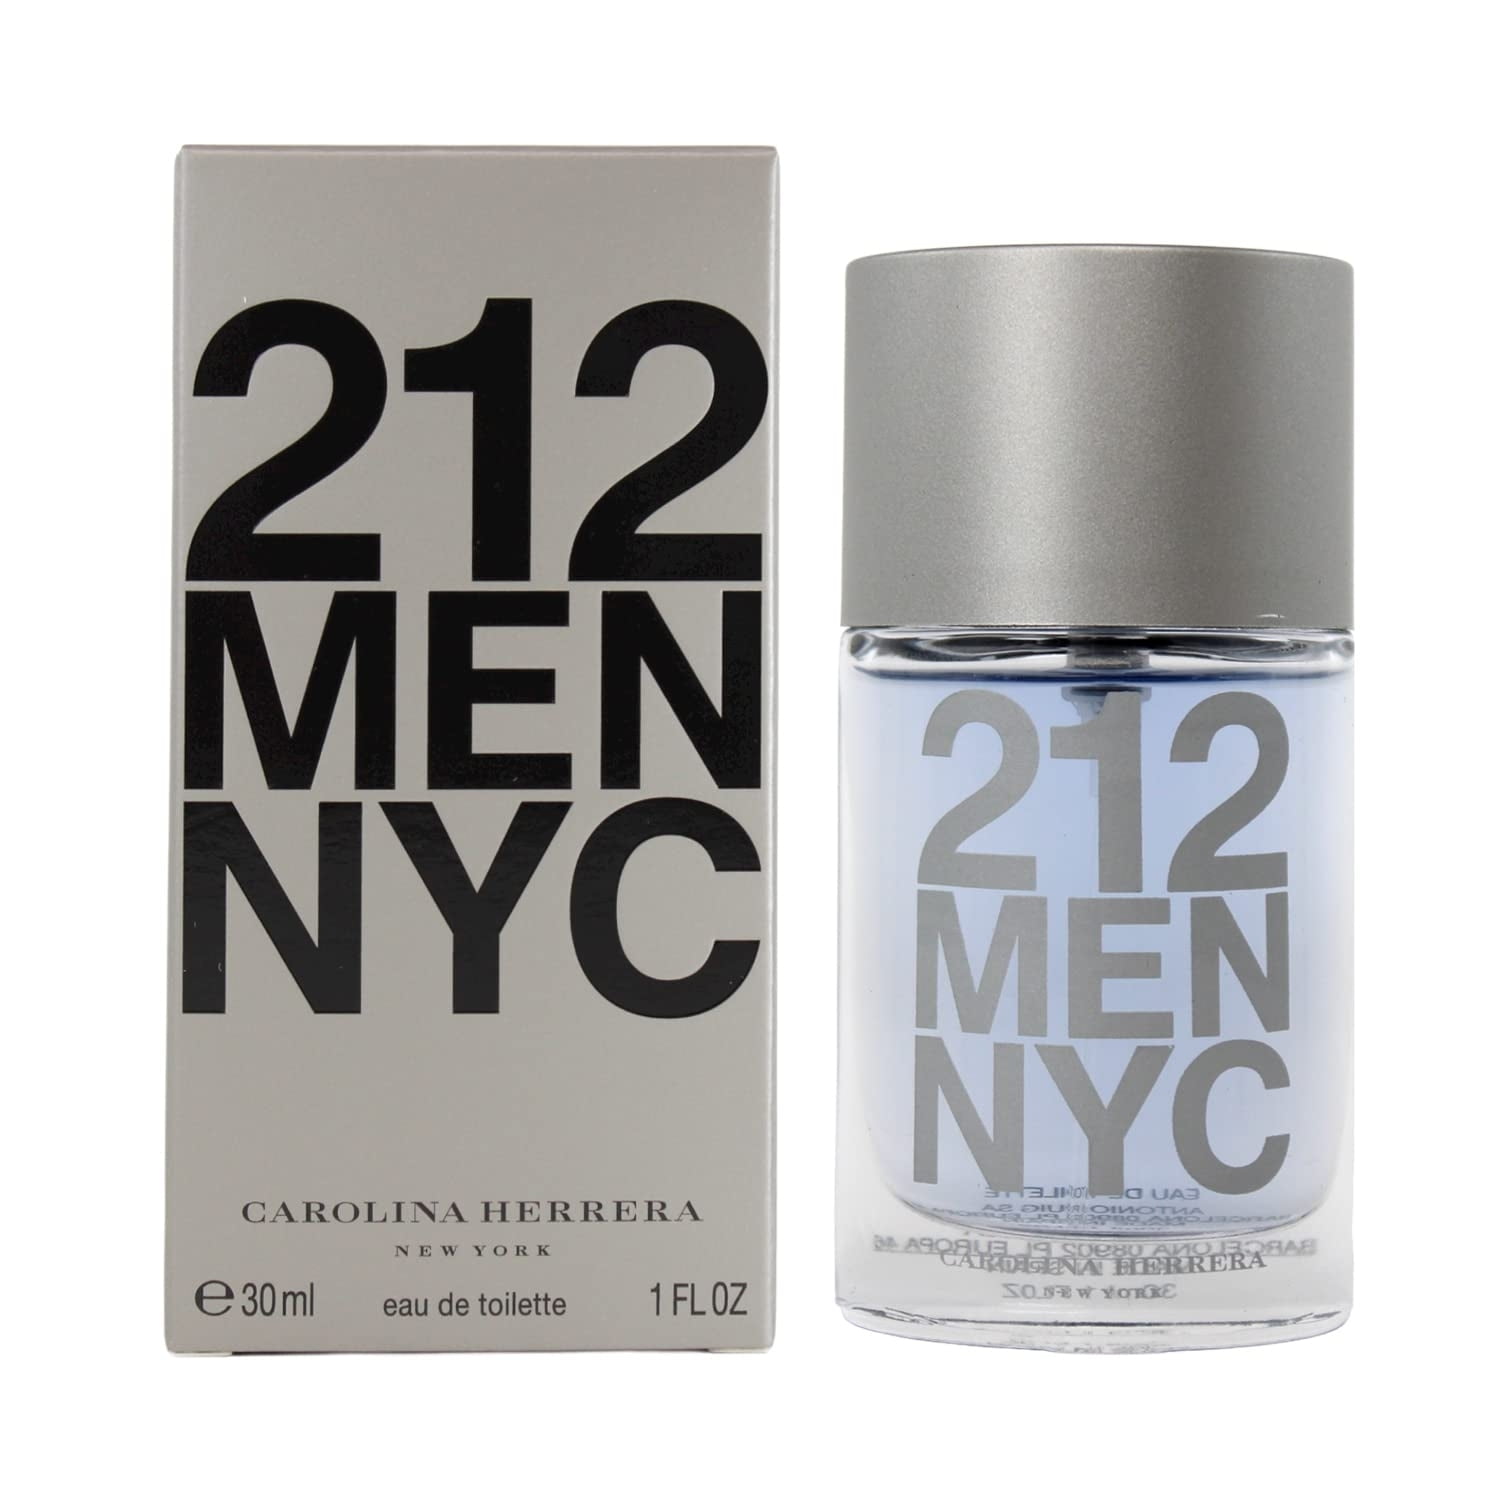 Fragrance Reviews: Carolina Herrera 212 Men Aqua, Jimmy Choo Man